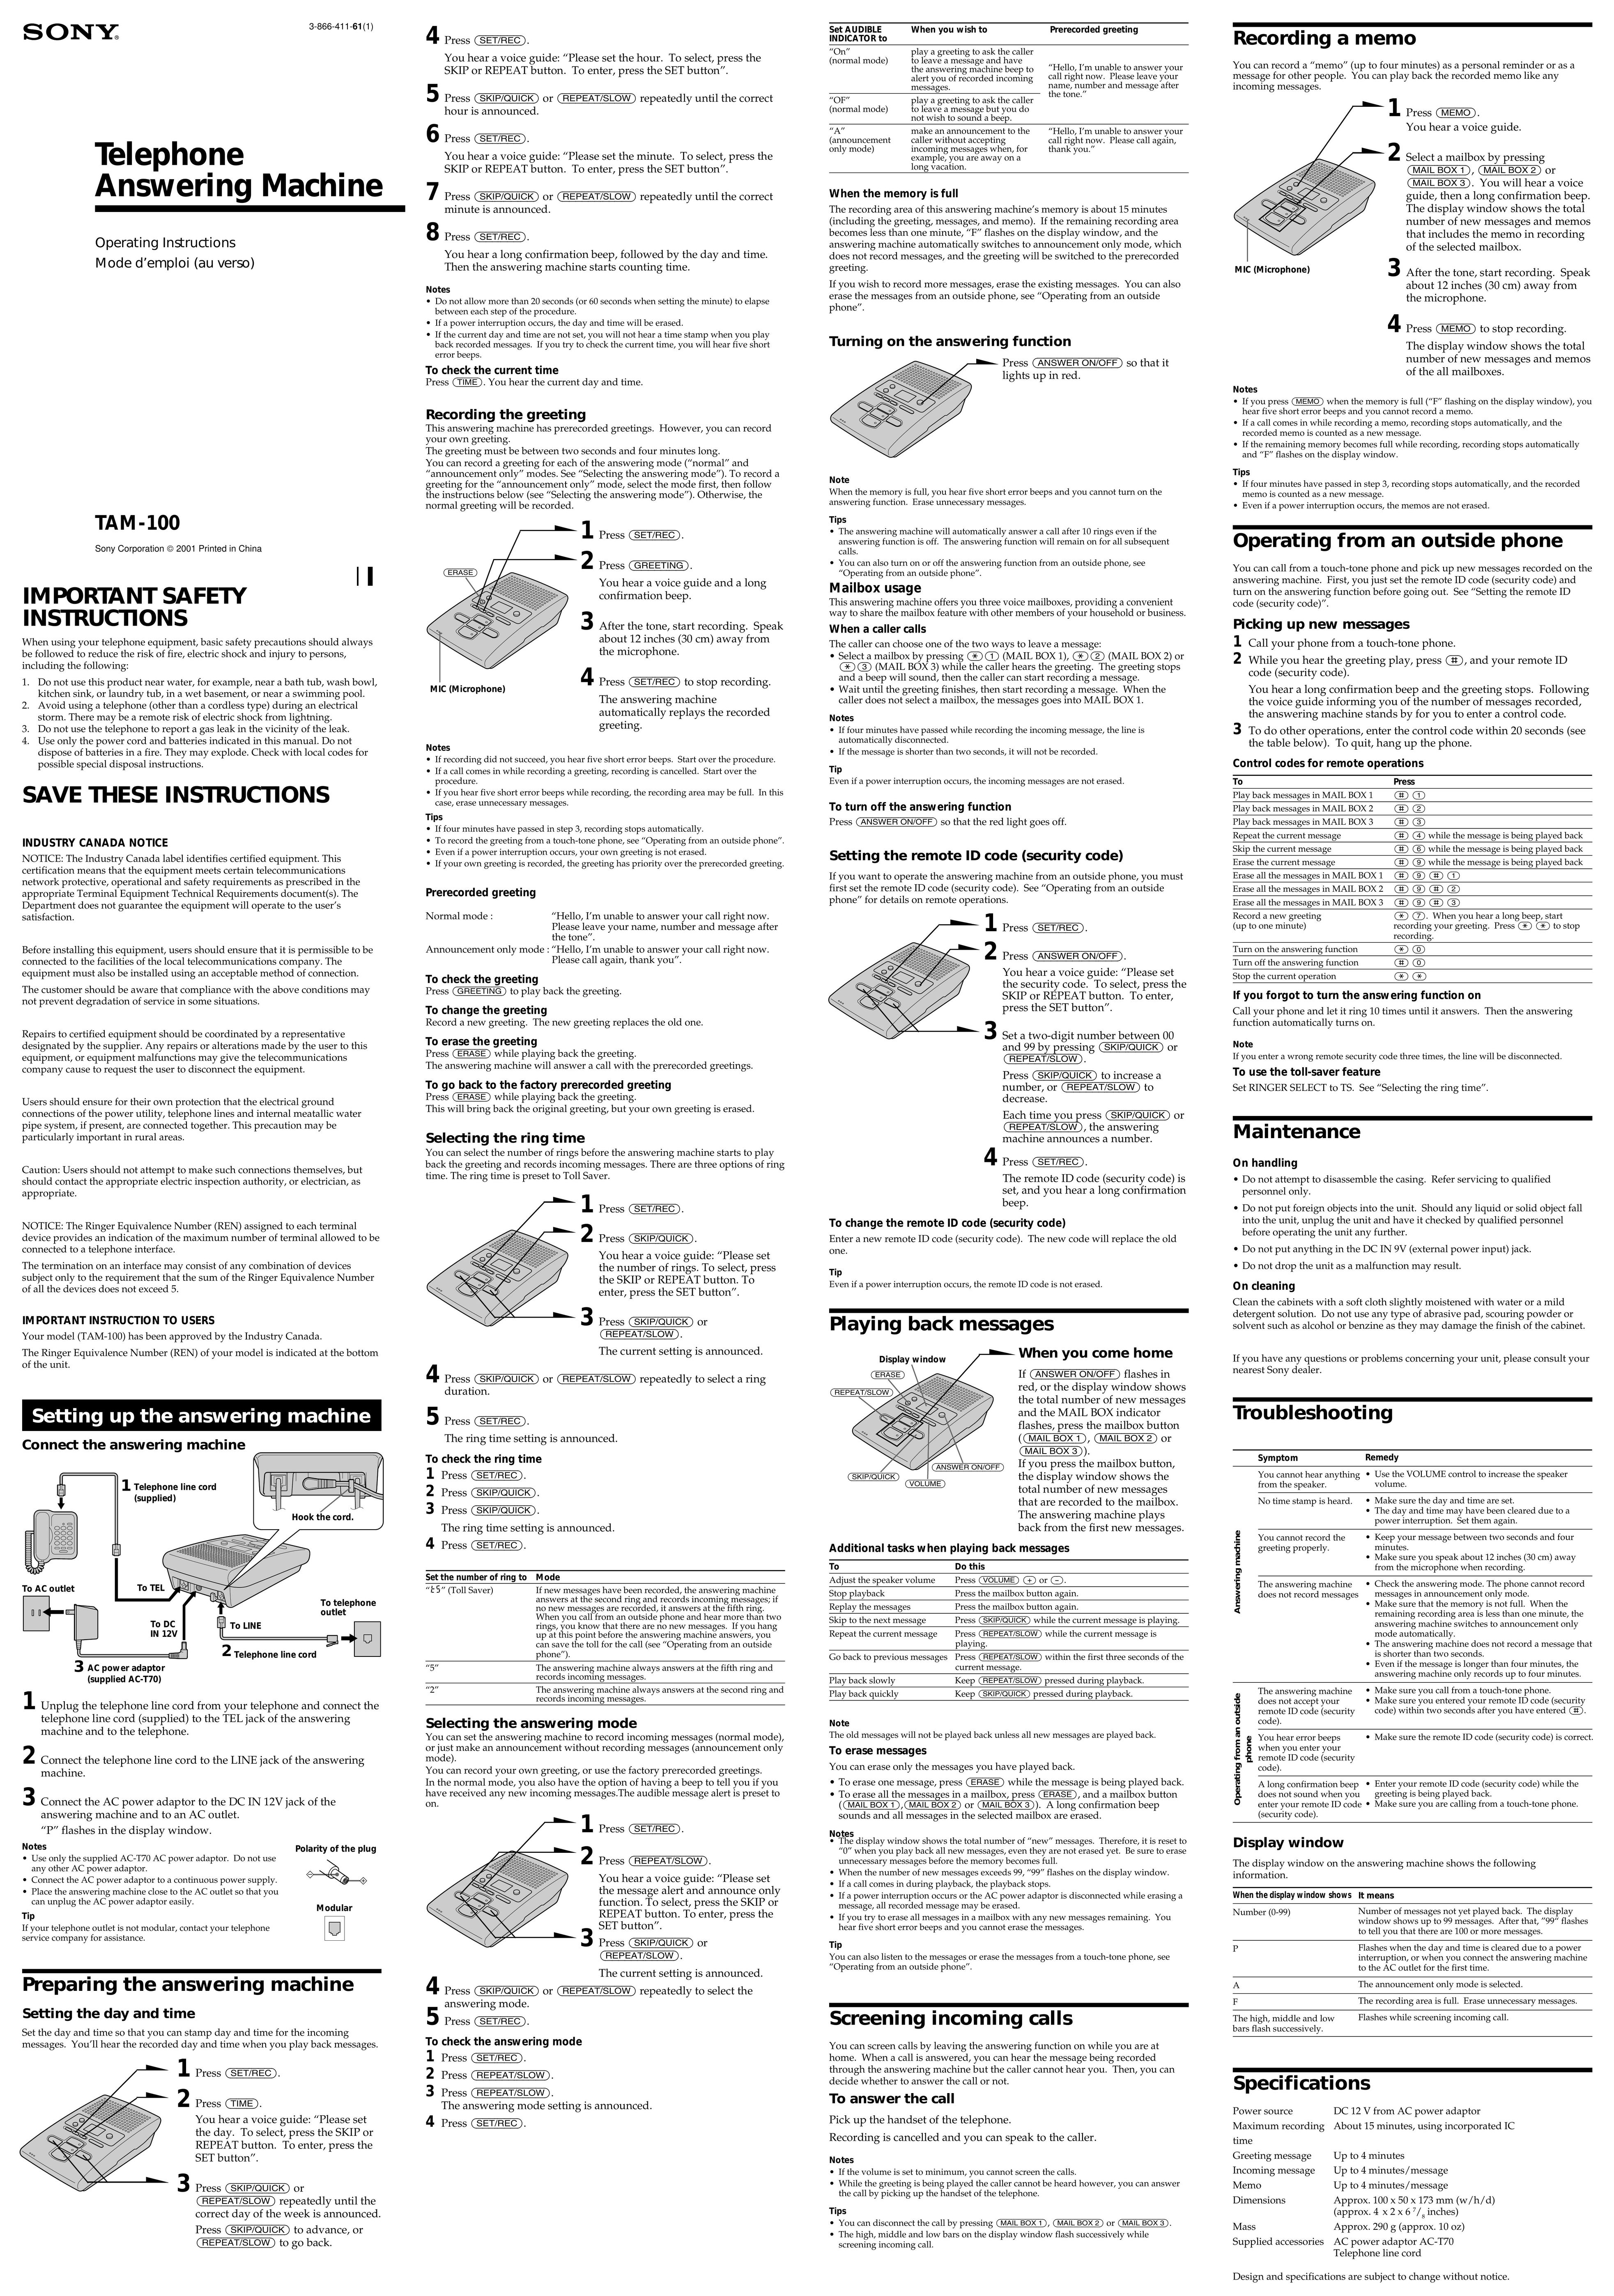 Sony TAM-100 Answering Machine User Manual